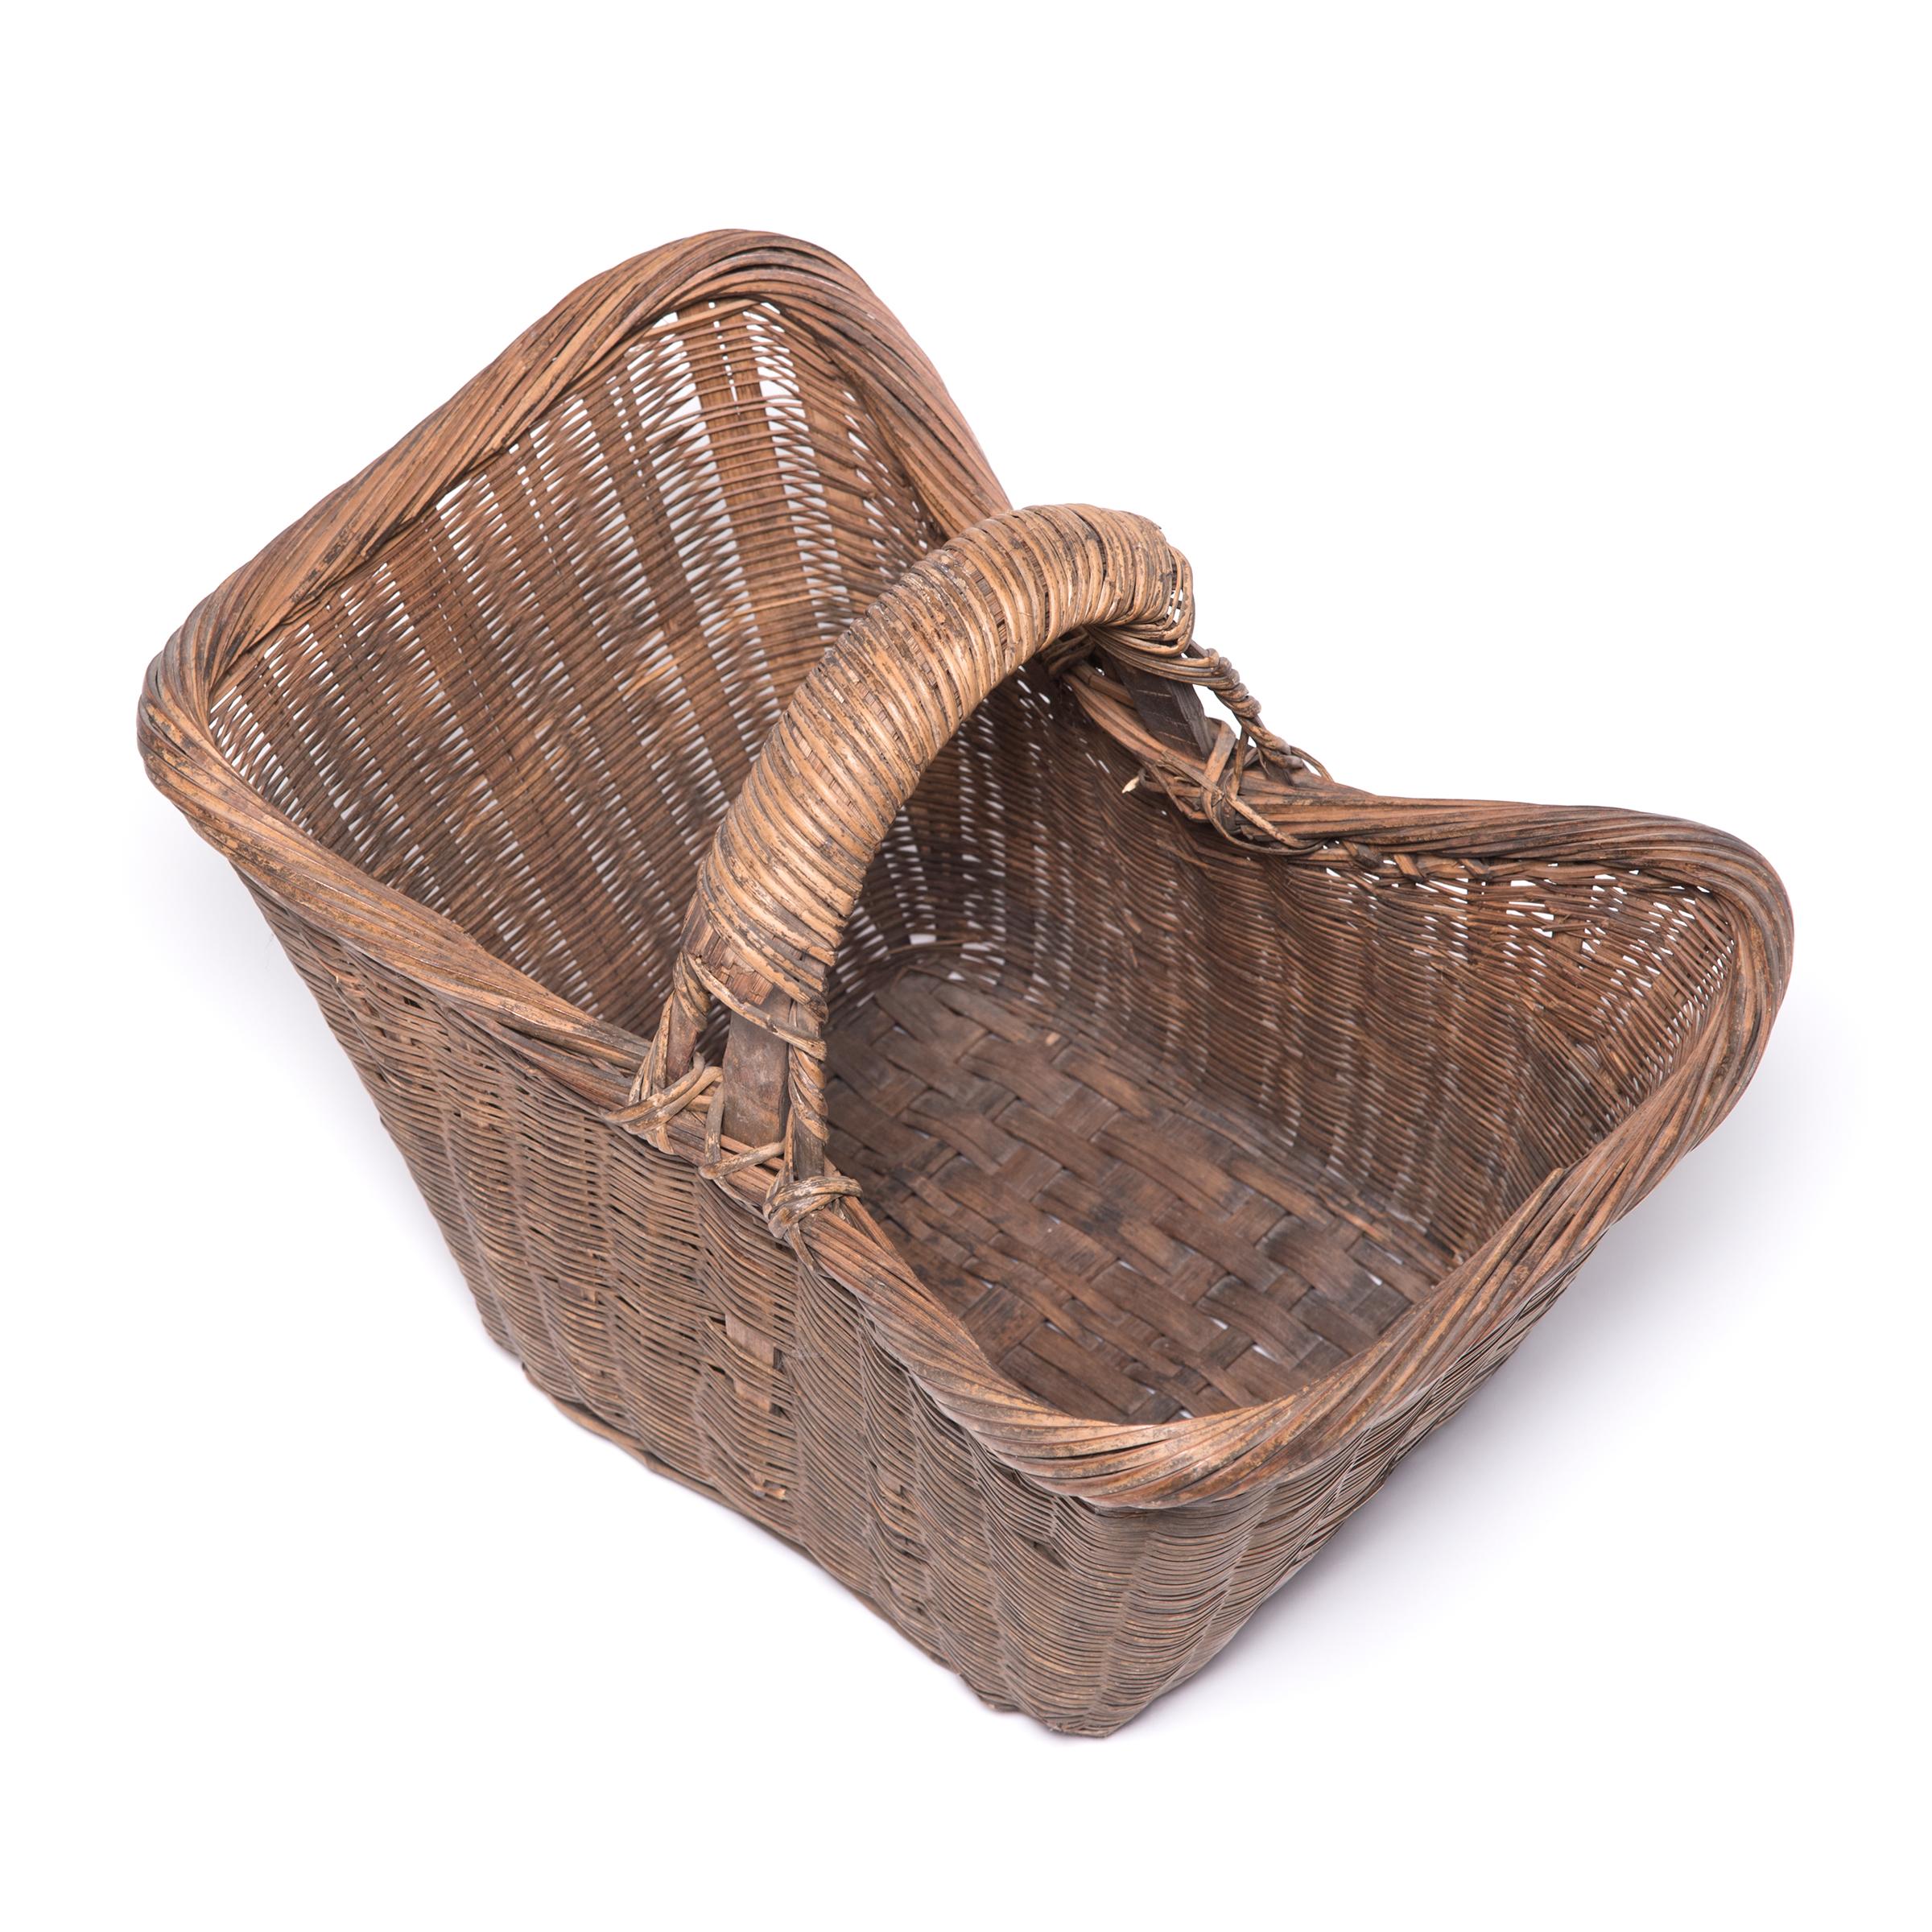 Rustic Chinese Twist Woven Market Basket